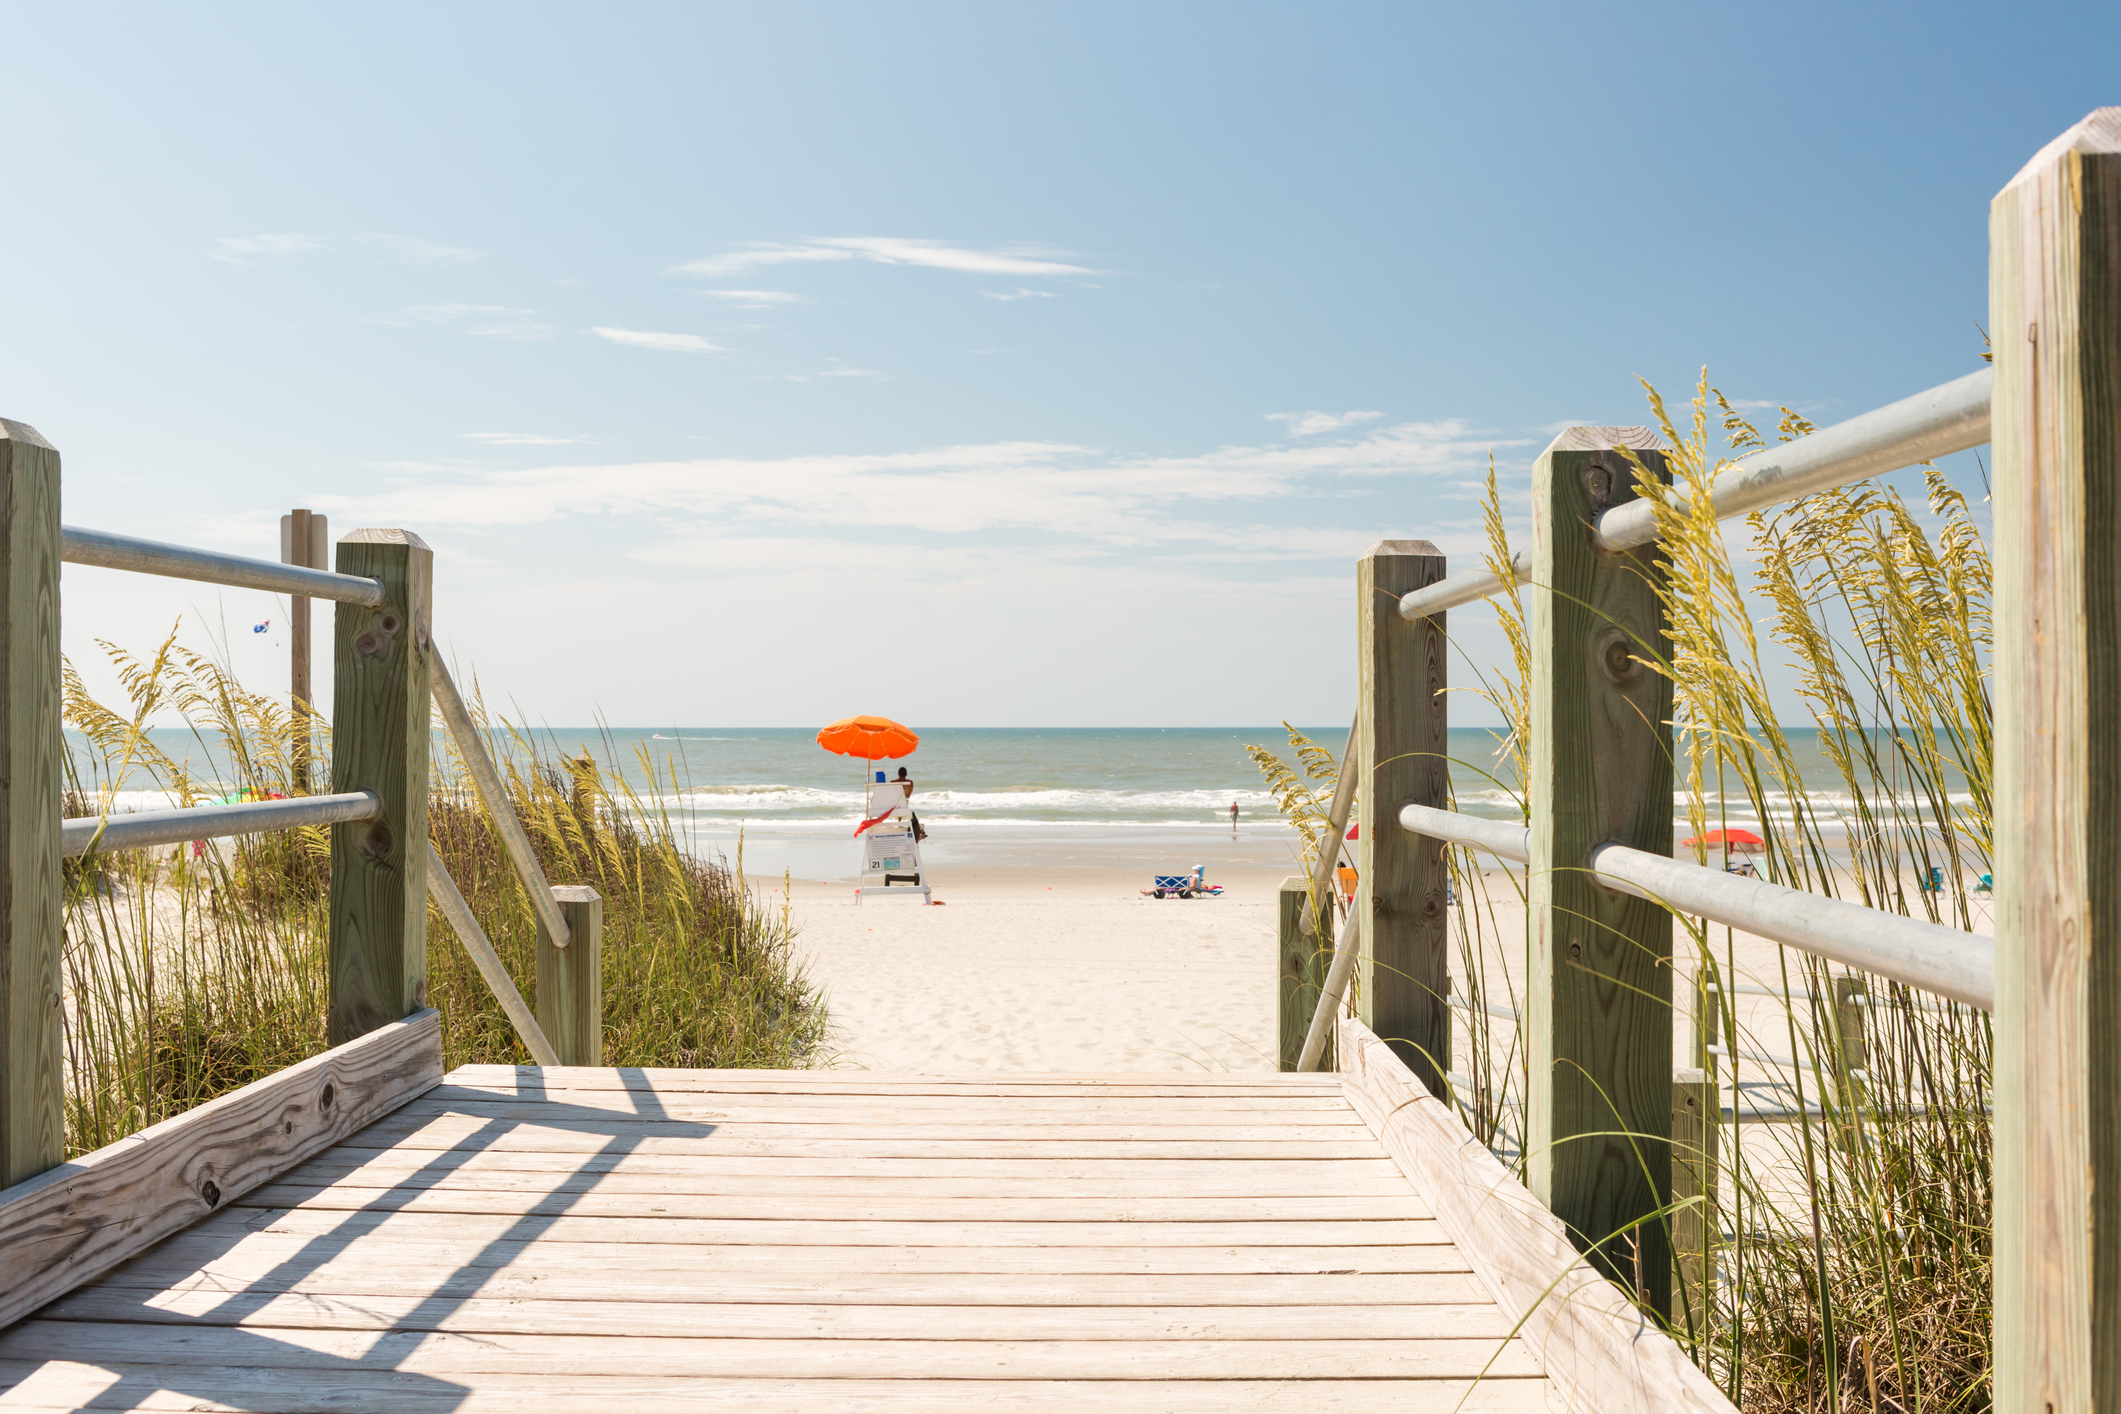 Myrtle Beach sand, ocean, water, lifeguard chair, orange umbrella, boardwalk to beach, sand dunes,